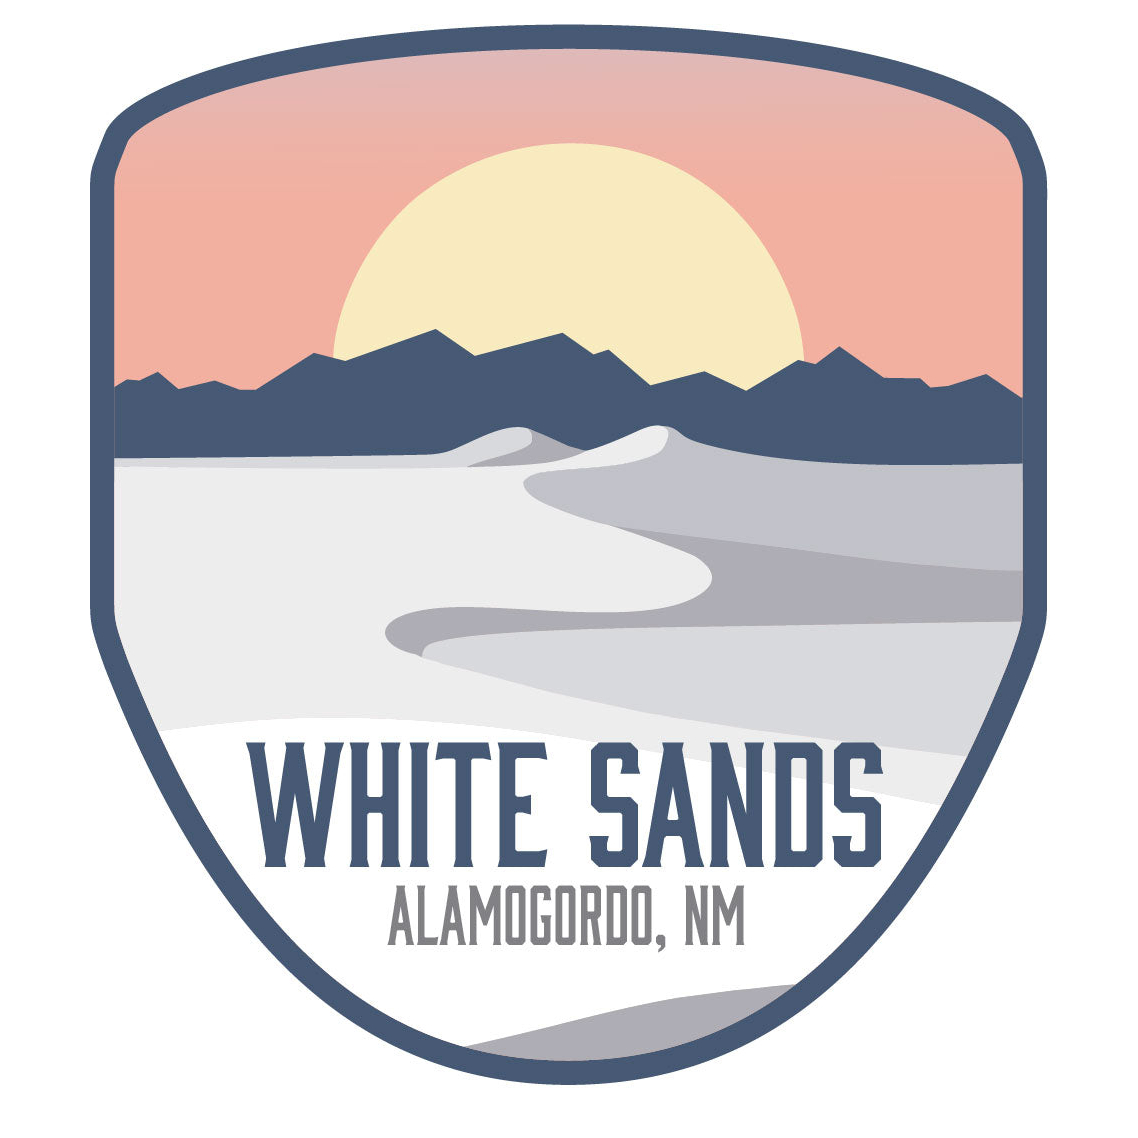 White Sands Alamogordo New Mexico Souvenir 4-Inch Vinyl Decal Sticker - Design D